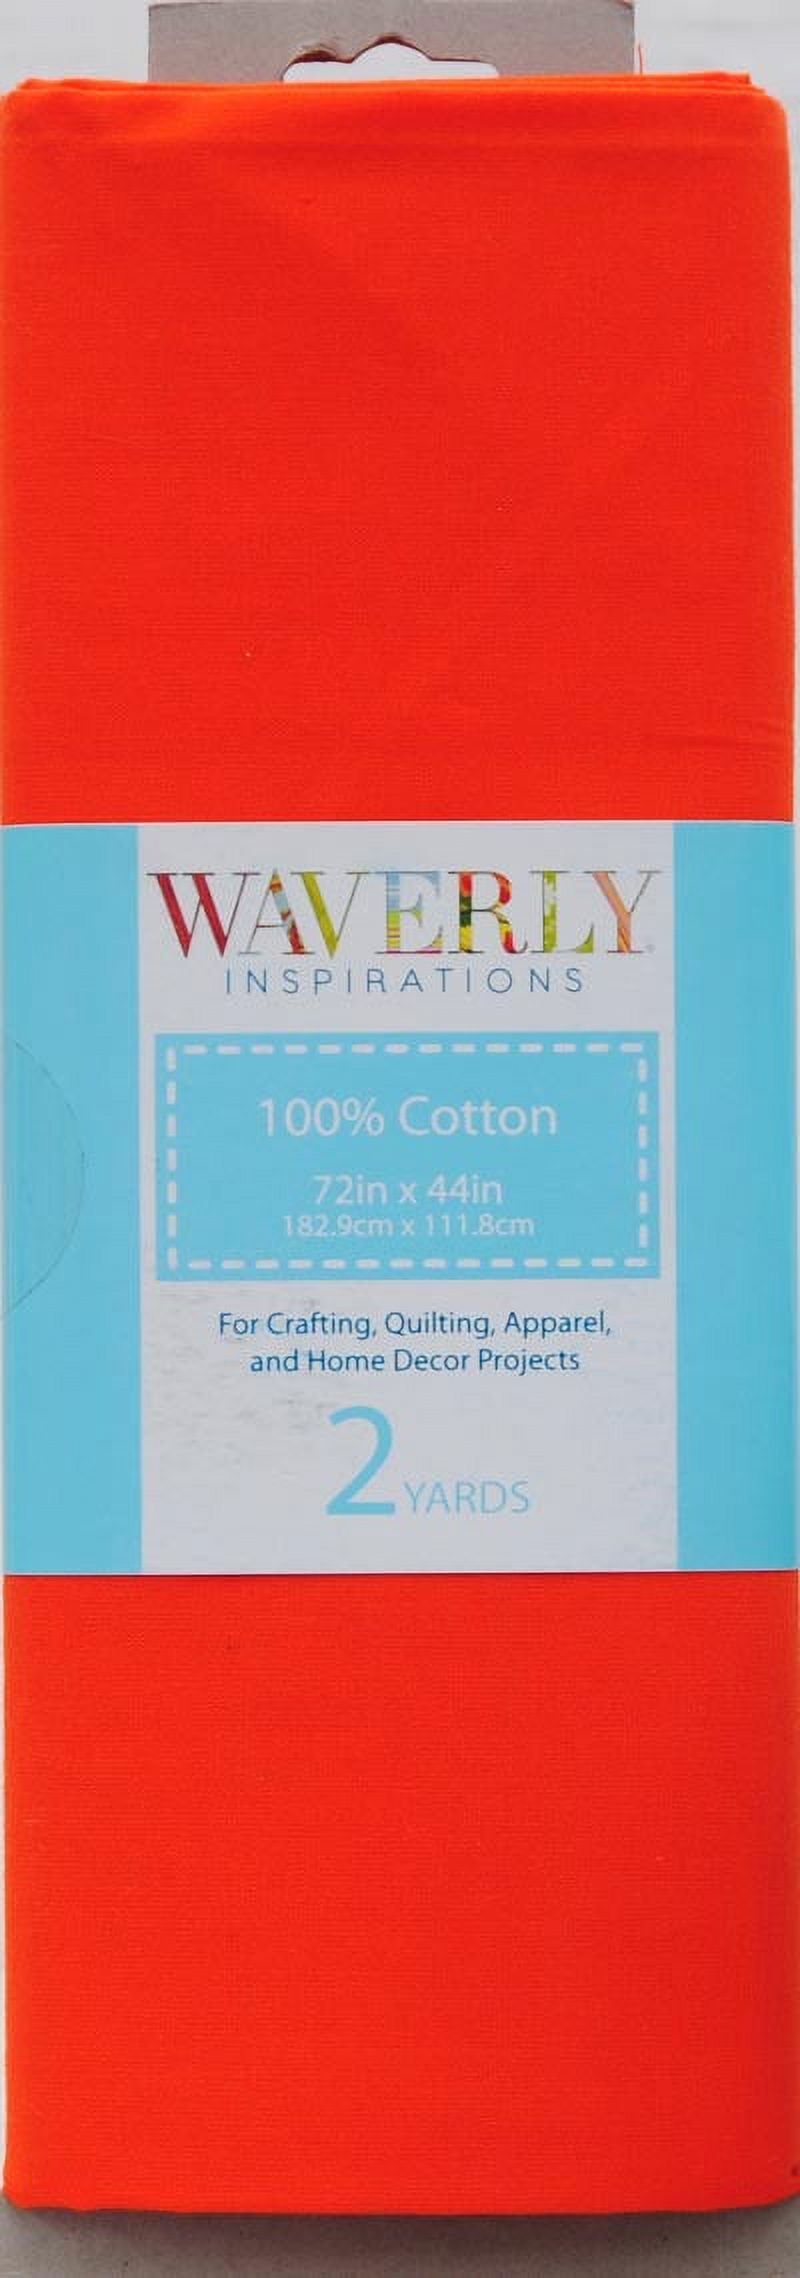 Waverly Inspirations 44" x 2 yd 100% Cotton Sewing & Craft Fabric, Orange - image 2 of 2